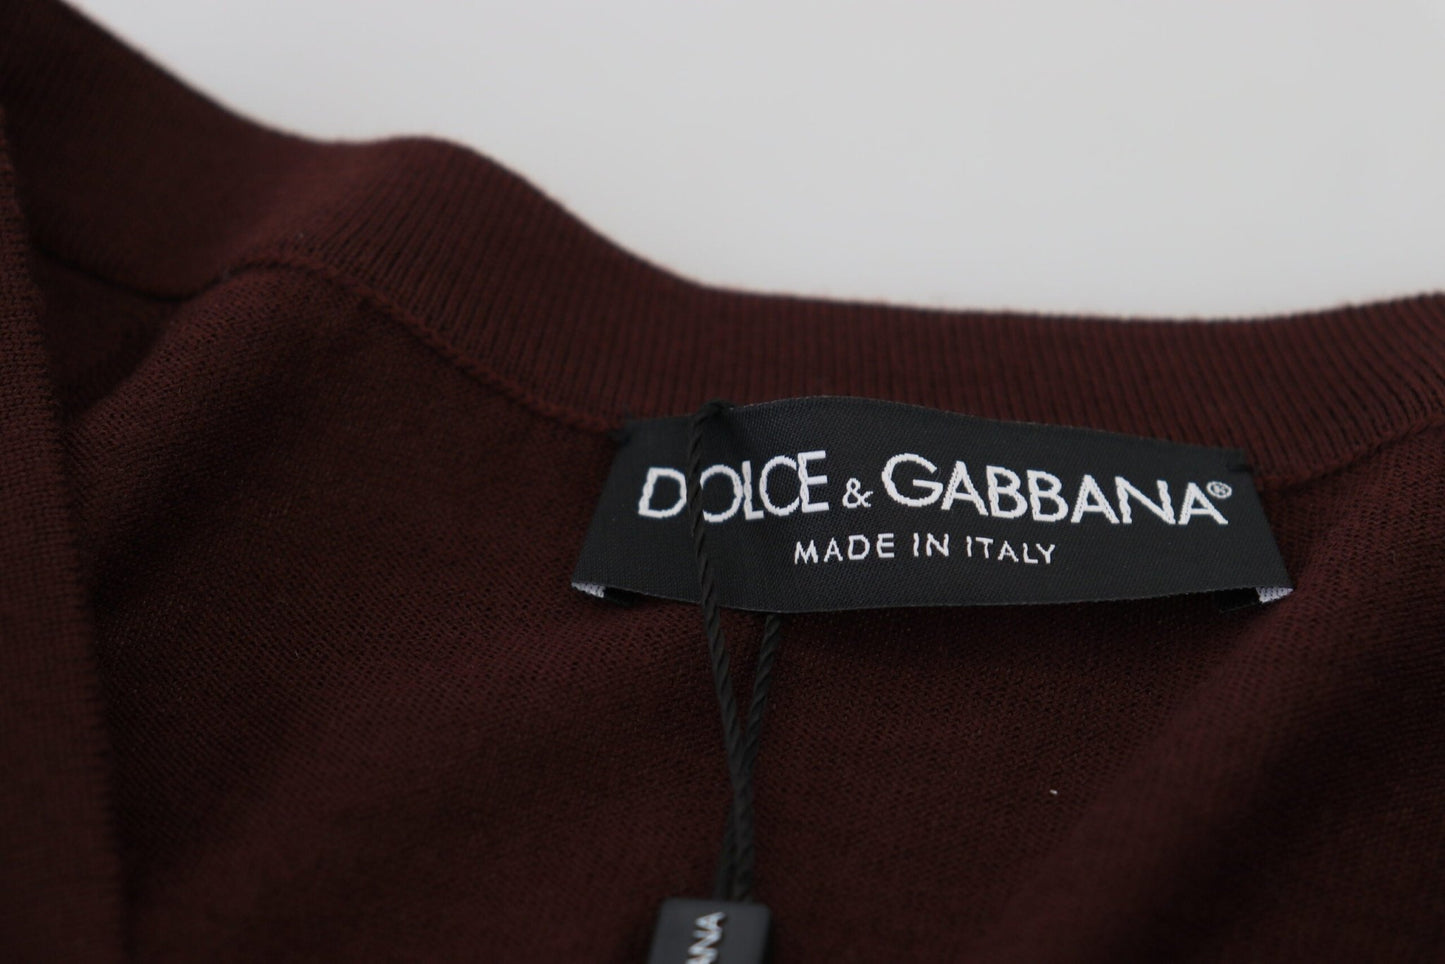 Dolce & Gabbana Chic Maroon V-Neck Wool Cardigan